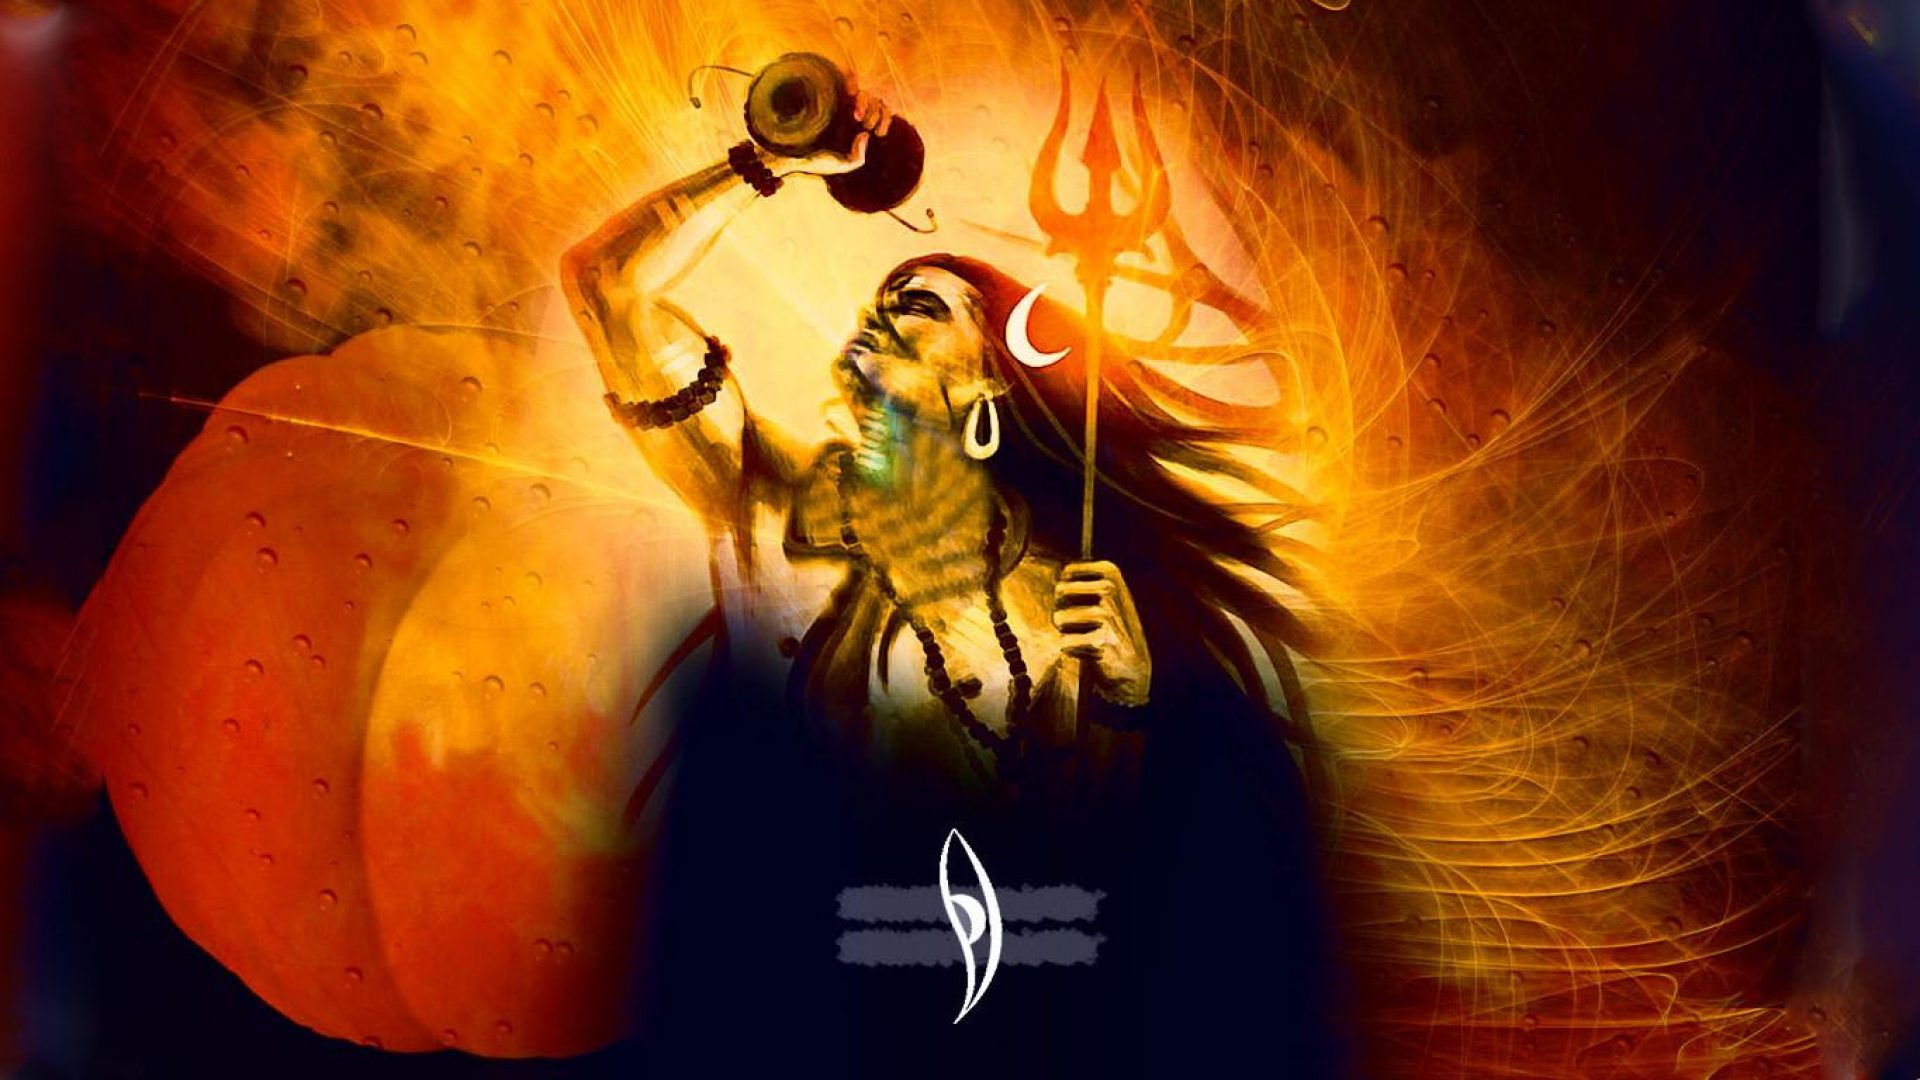 Rudra Avatars Of Lord Shiva Image | Hindu Gods and Goddesses